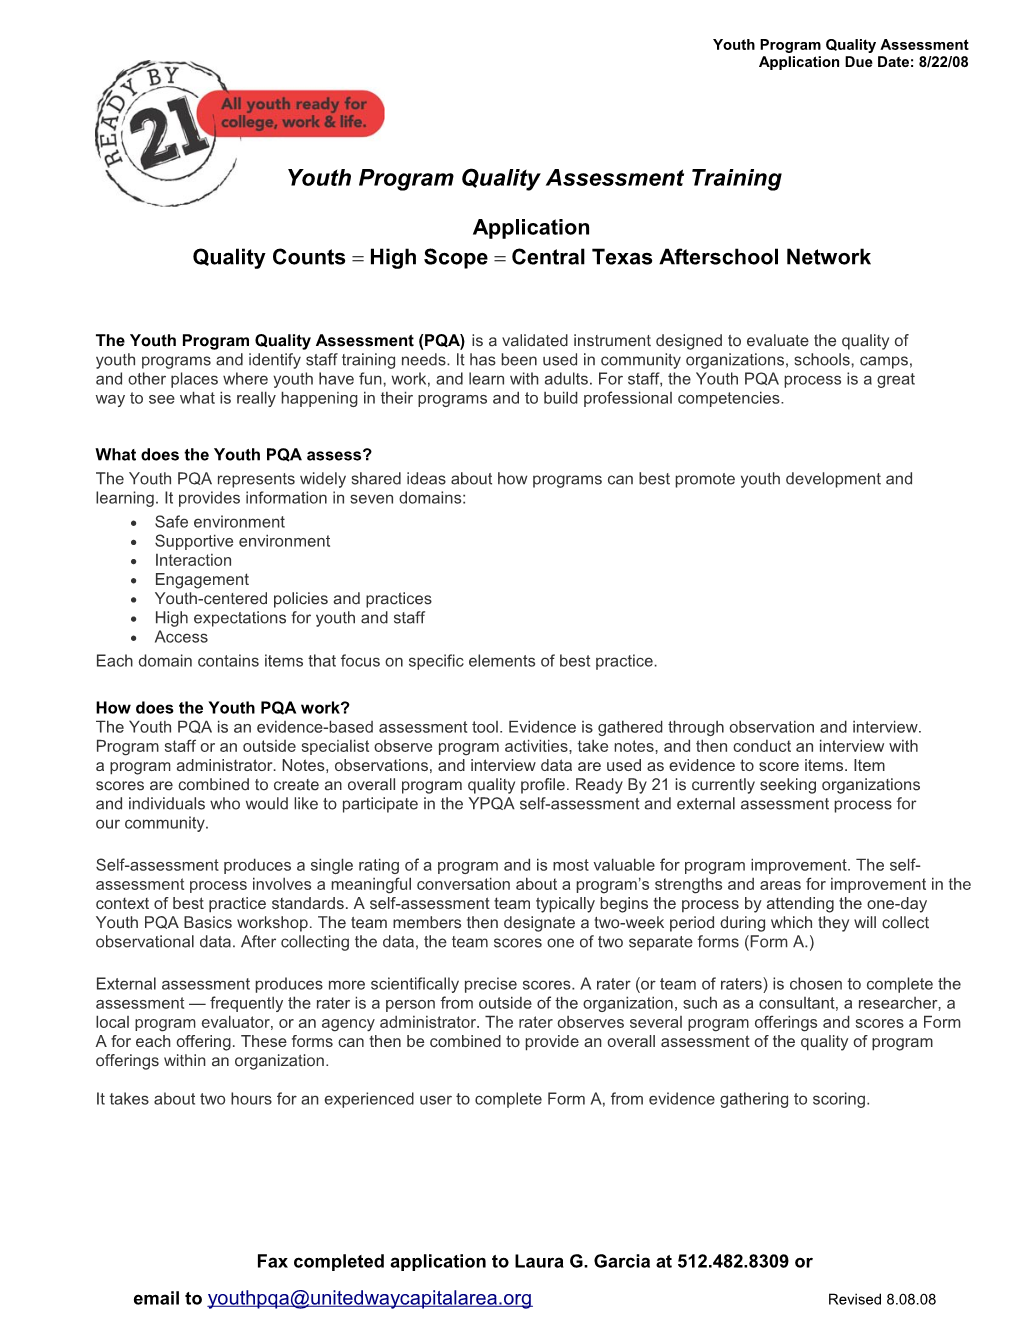 Youth Program Quality Assessment Training